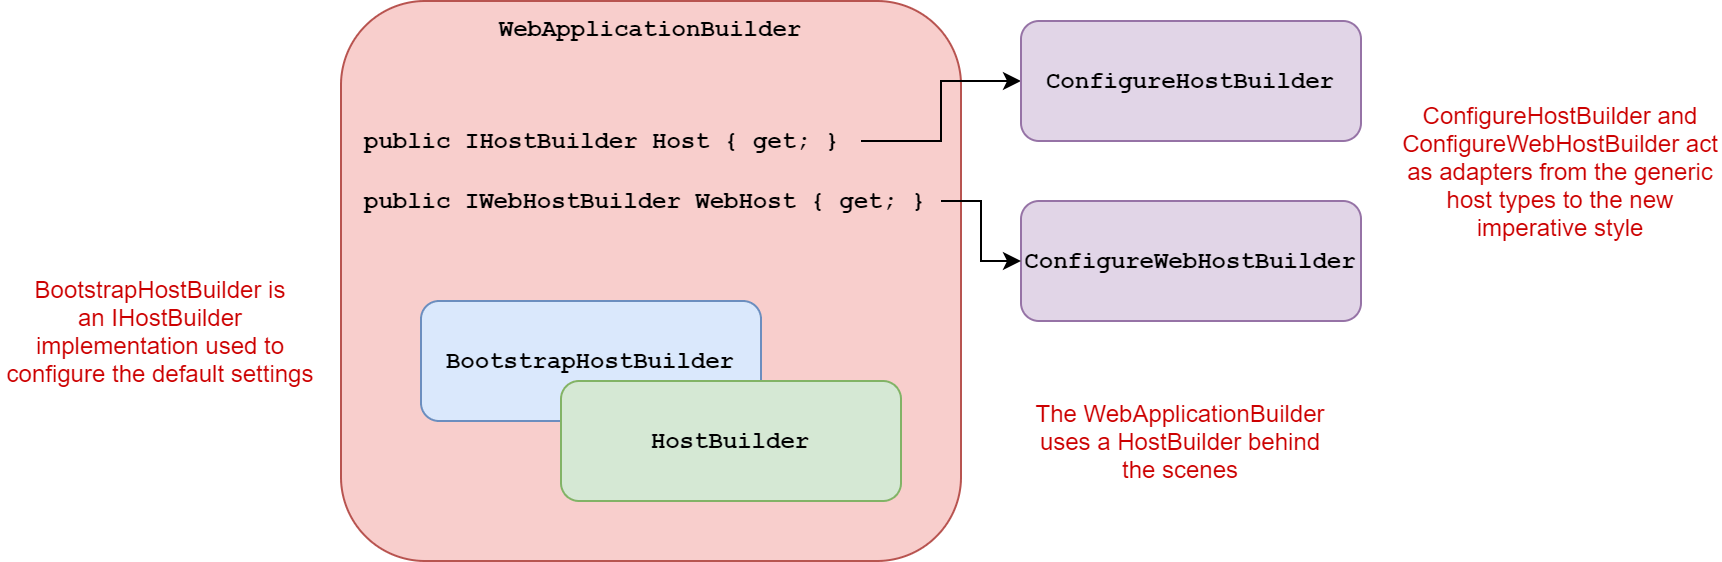 Multiple IHostBuilder types used by WebApplicationBuilder